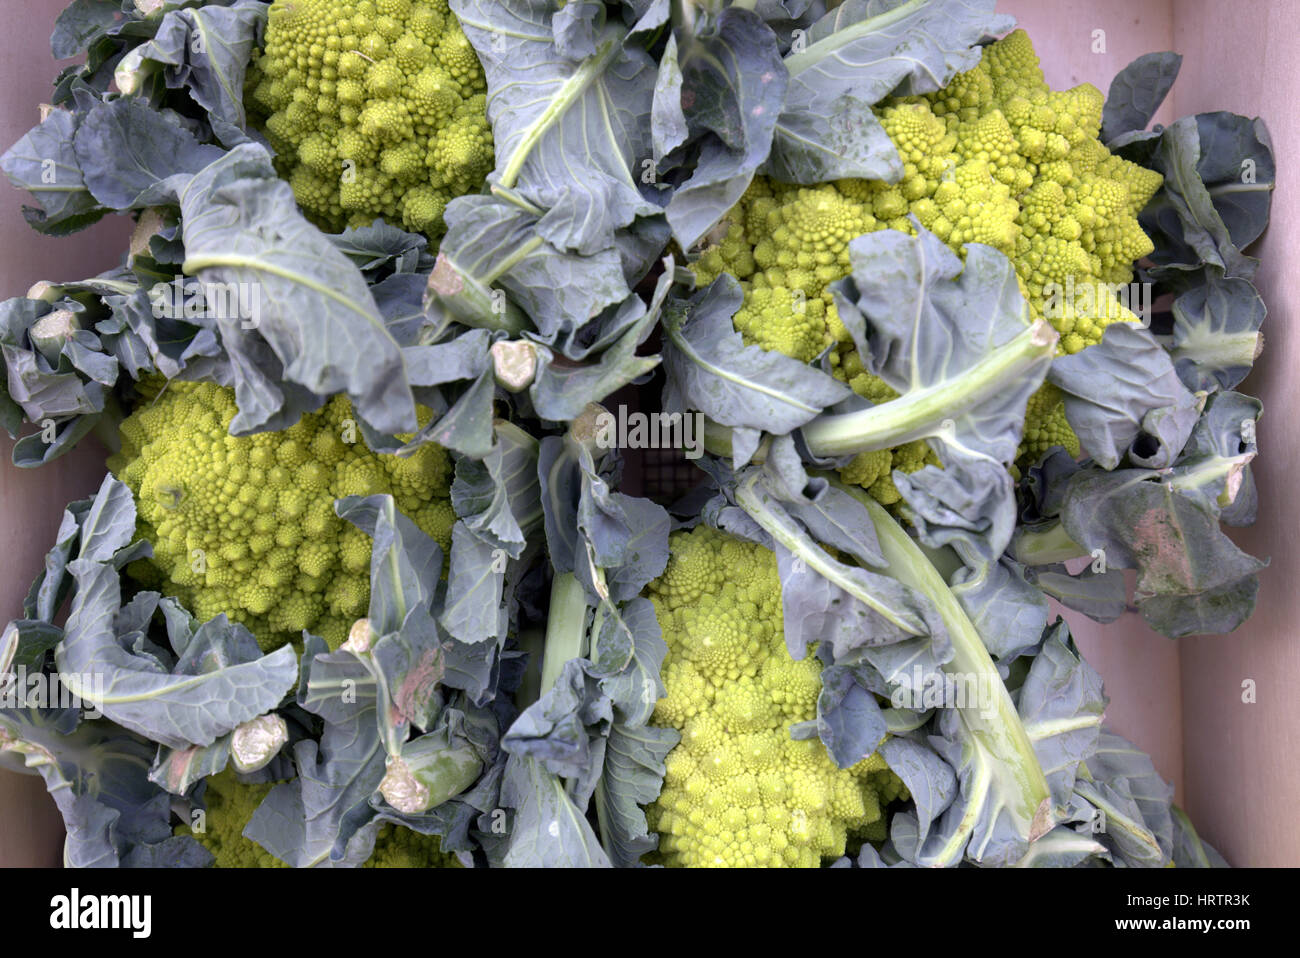 fruit and vegetable stall Romanesco broccoflower Stock Photo